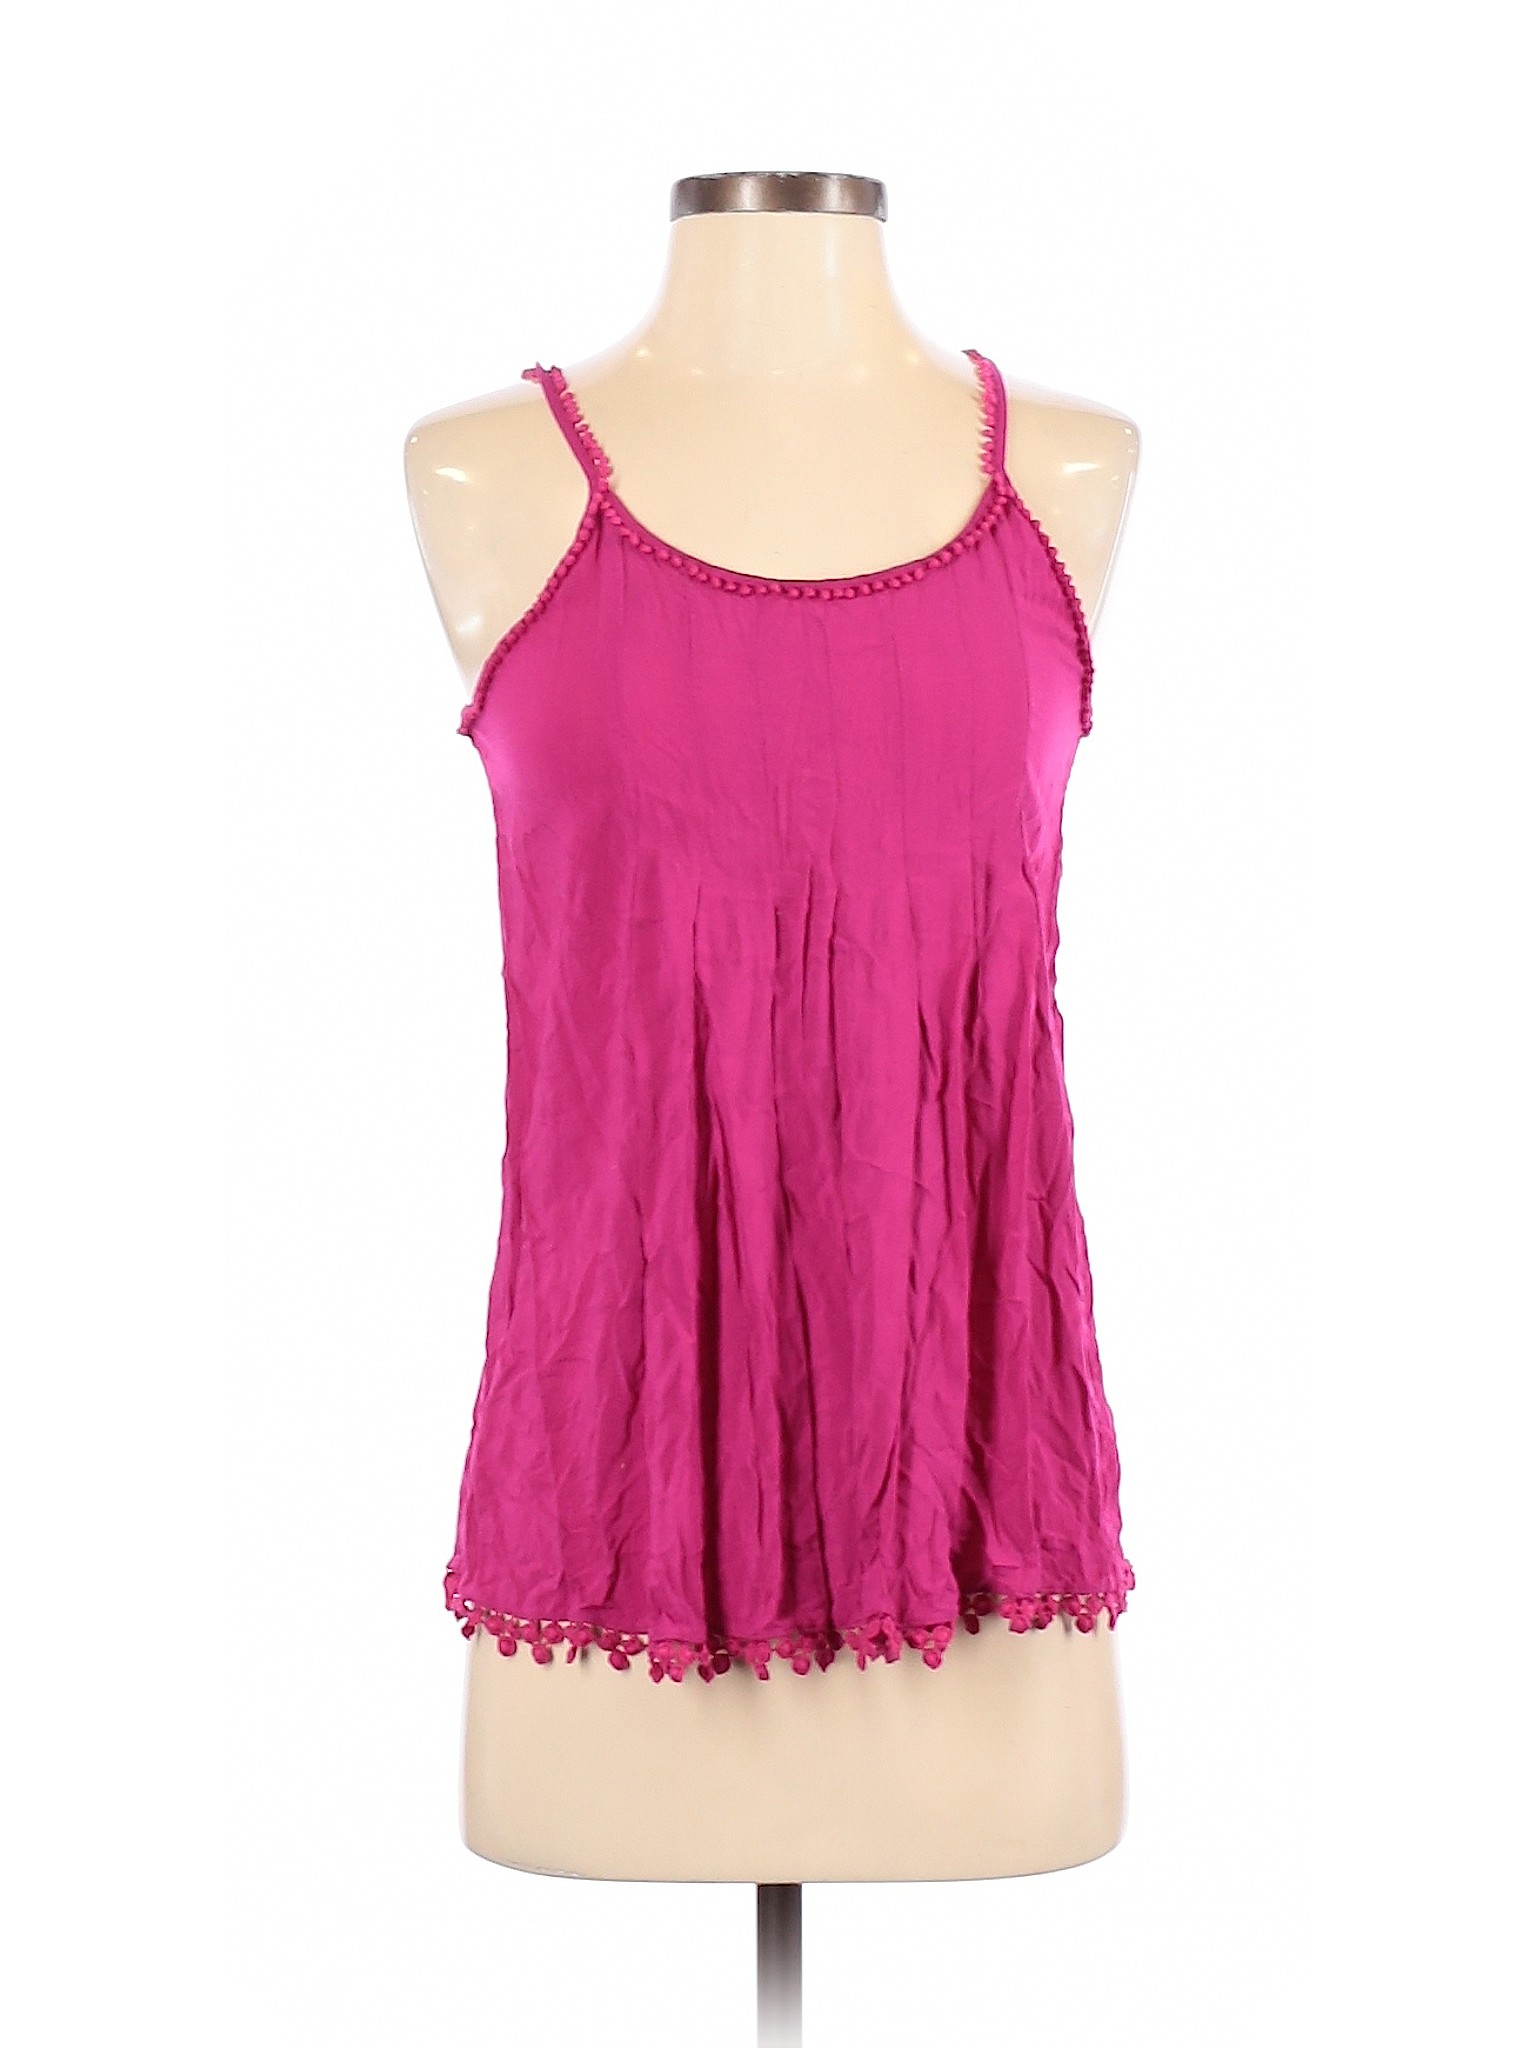 Stylus Women Pink Sleeveless Blouse S | eBay